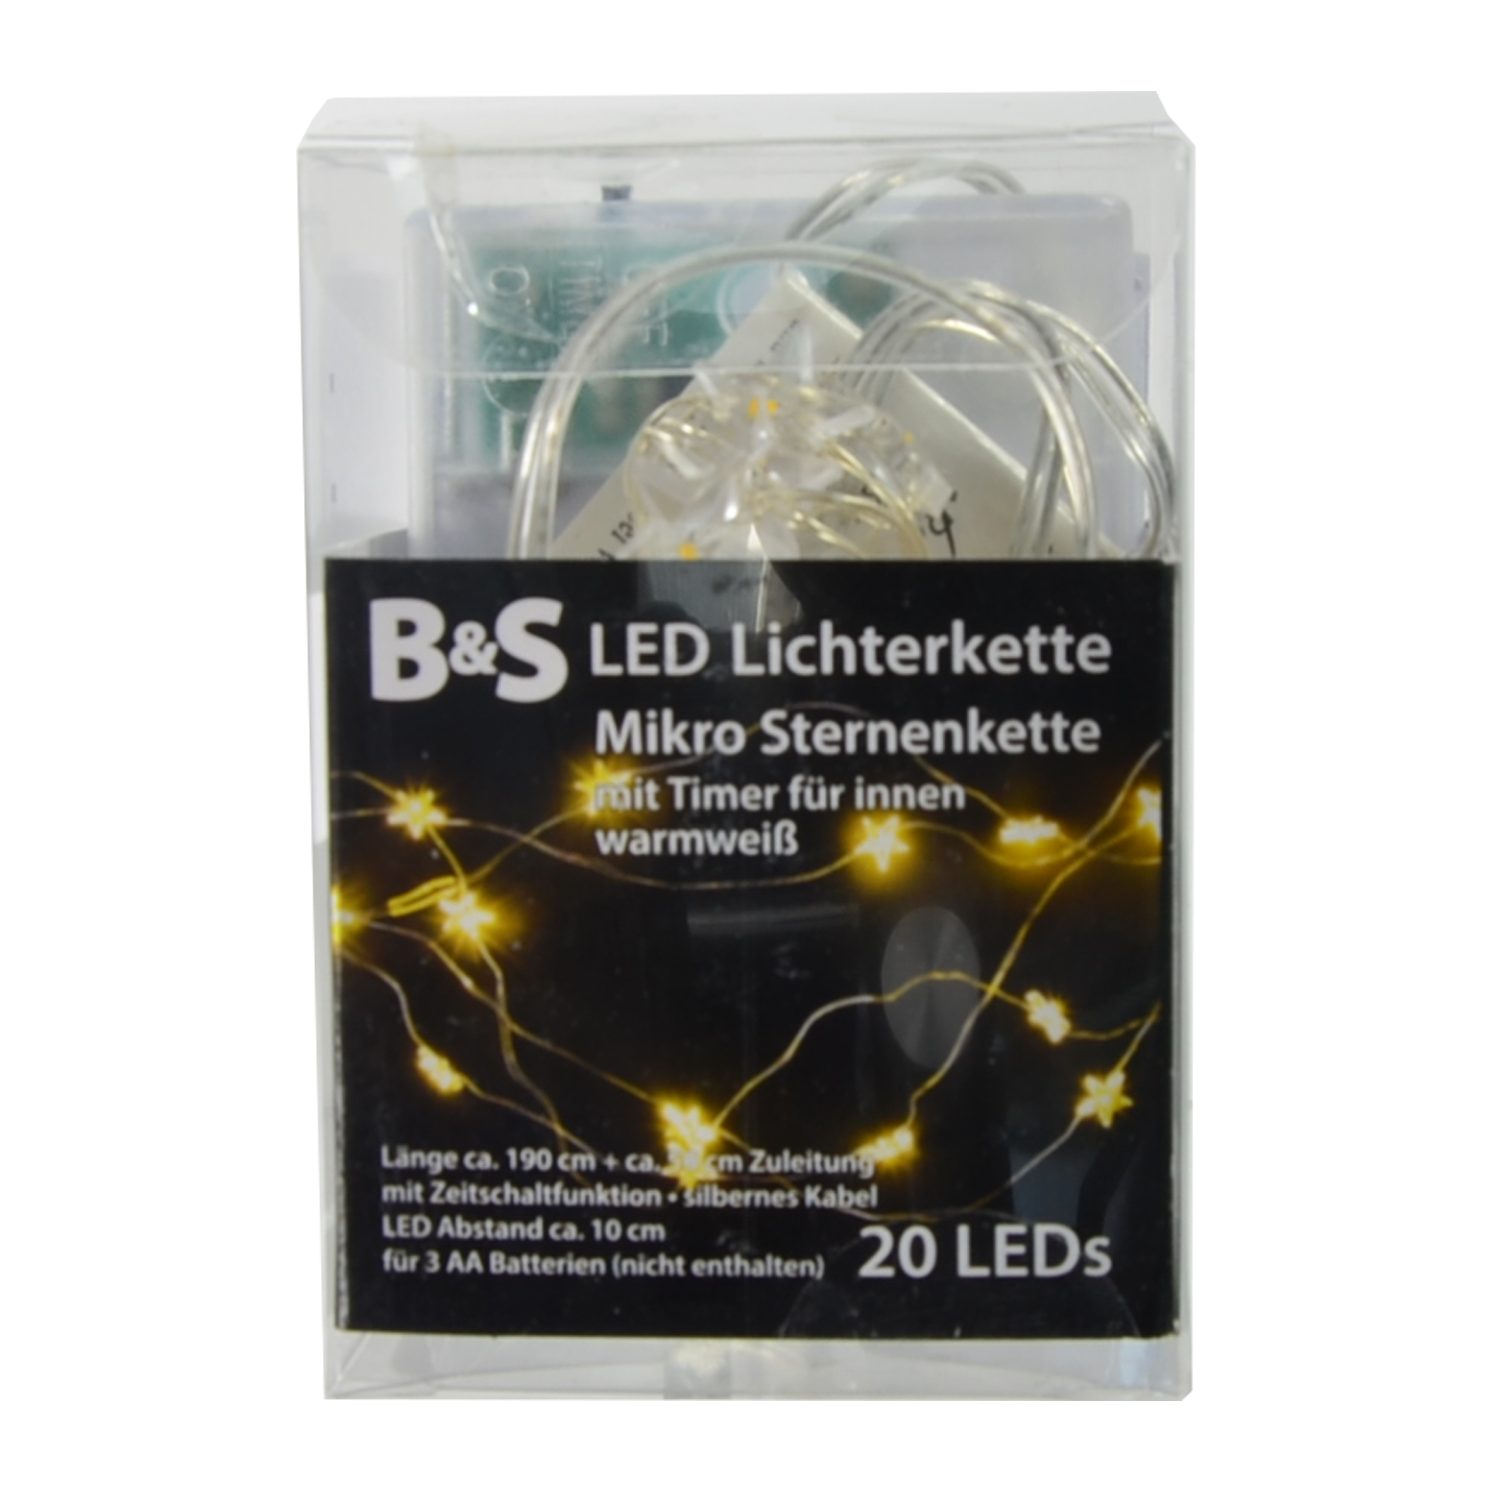 B&S LED-Lichterkette LED Batterie Mikro Sternen Lichterkette 20 LEDs warmweiß Innenbereich